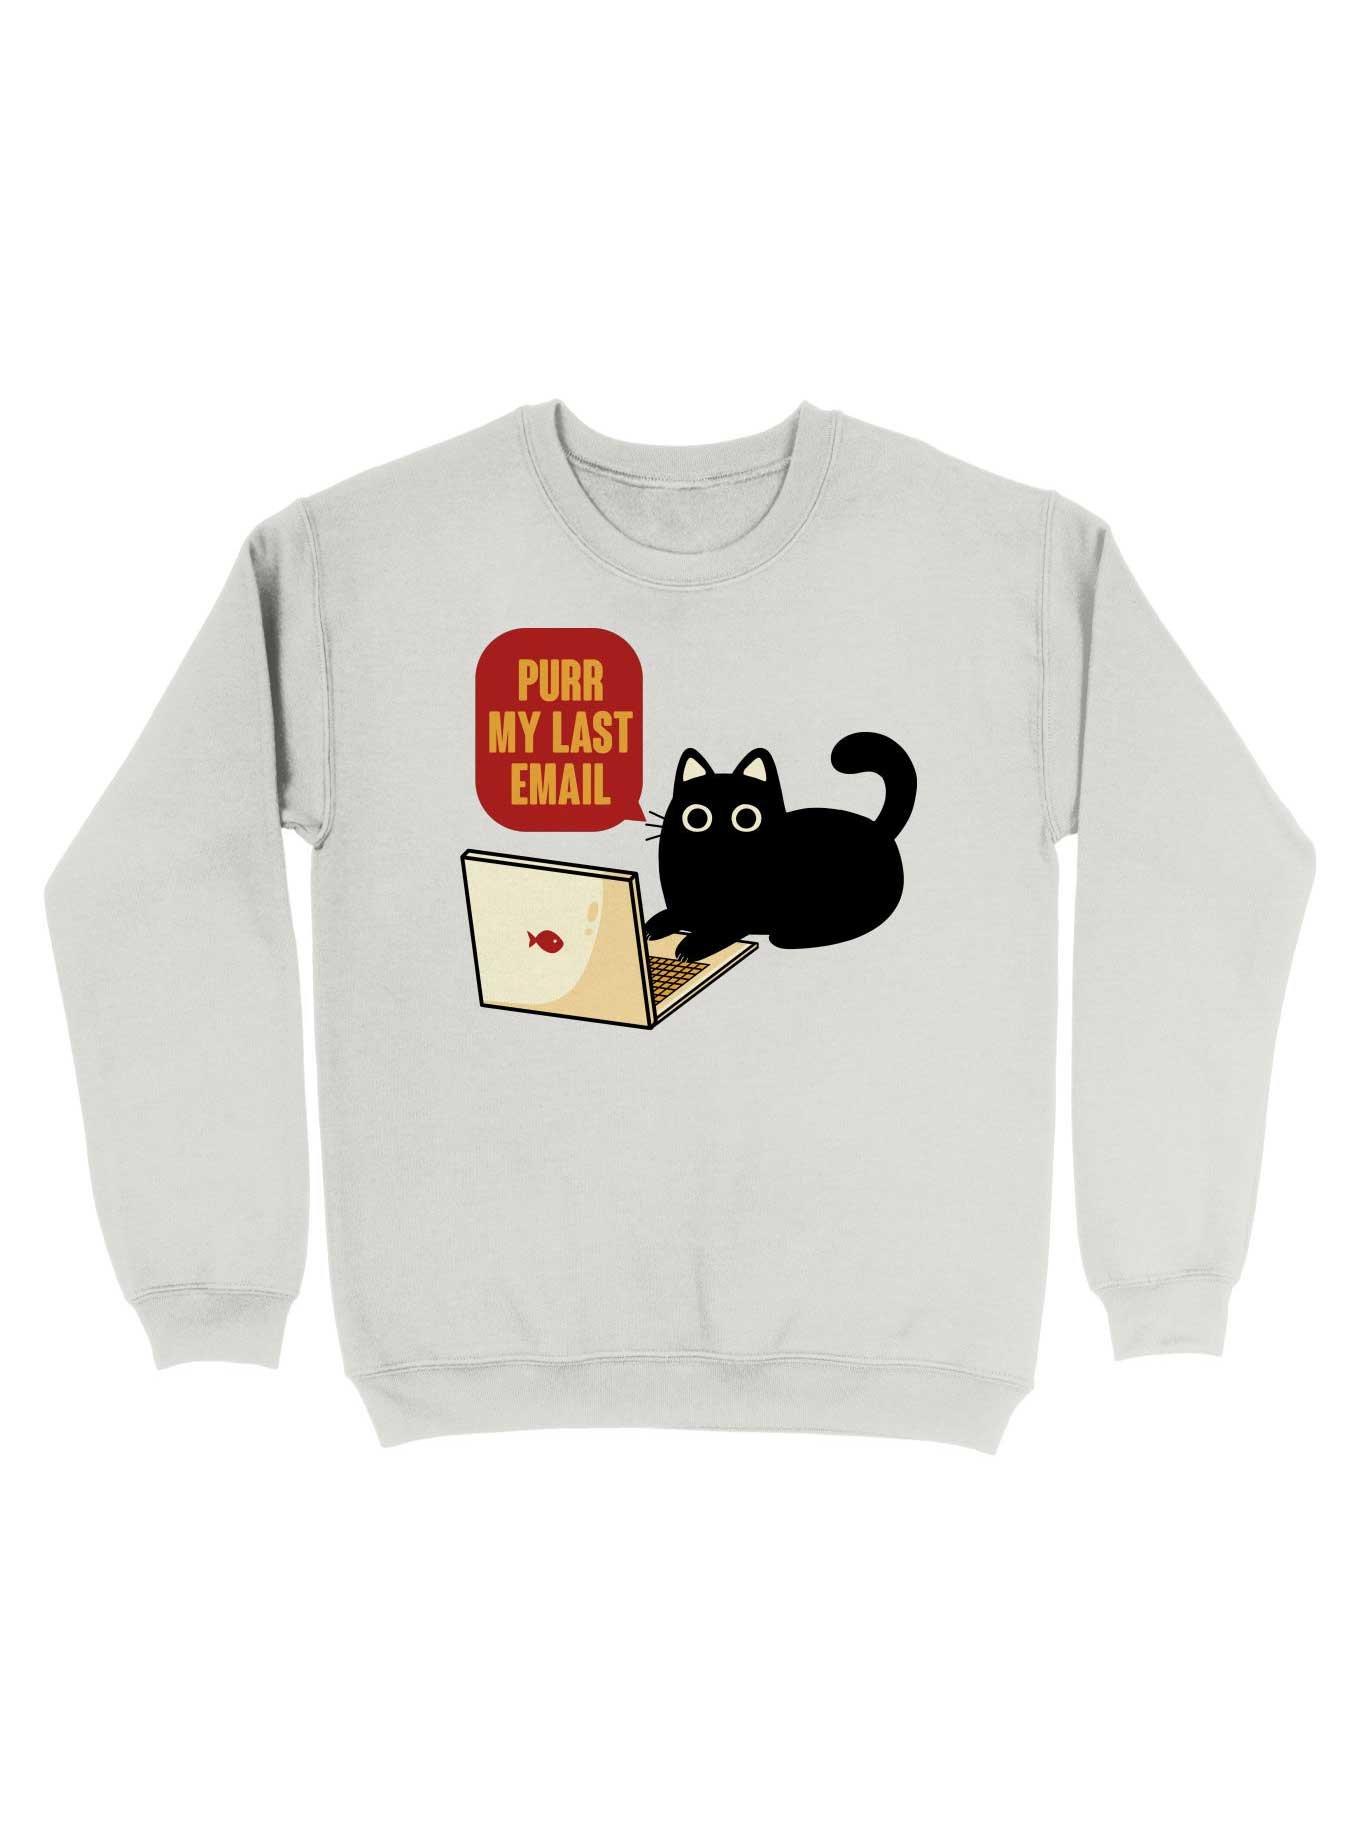 Purr My Last Email Black Cat Sweatshirt, WHITE, hi-res